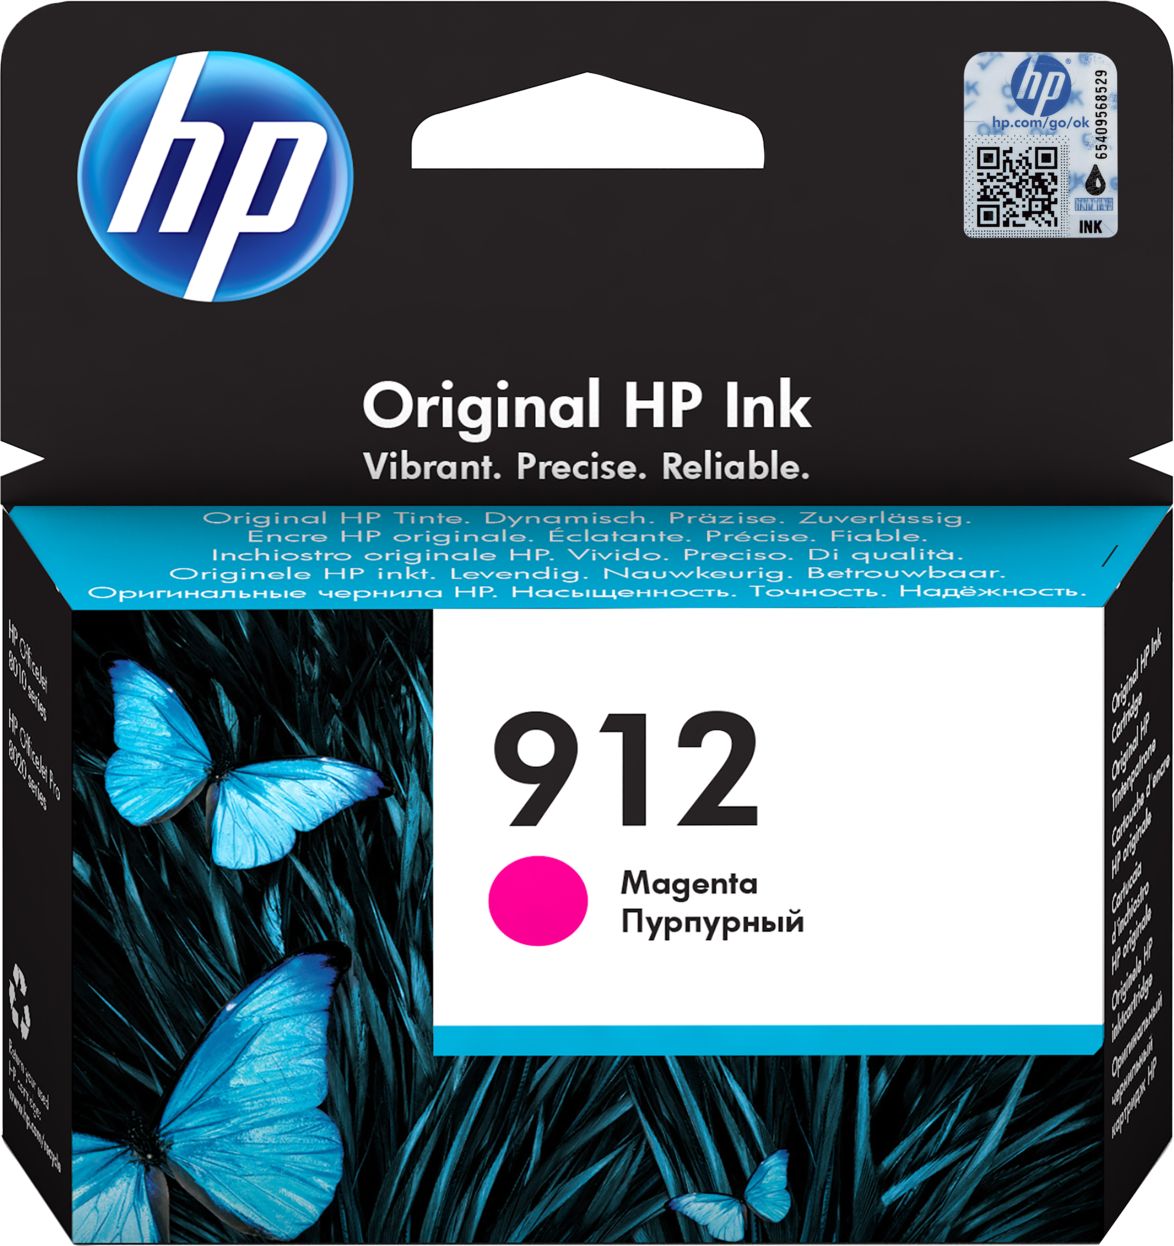 HP 912 Magenta Ink Cartridge kārtridžs